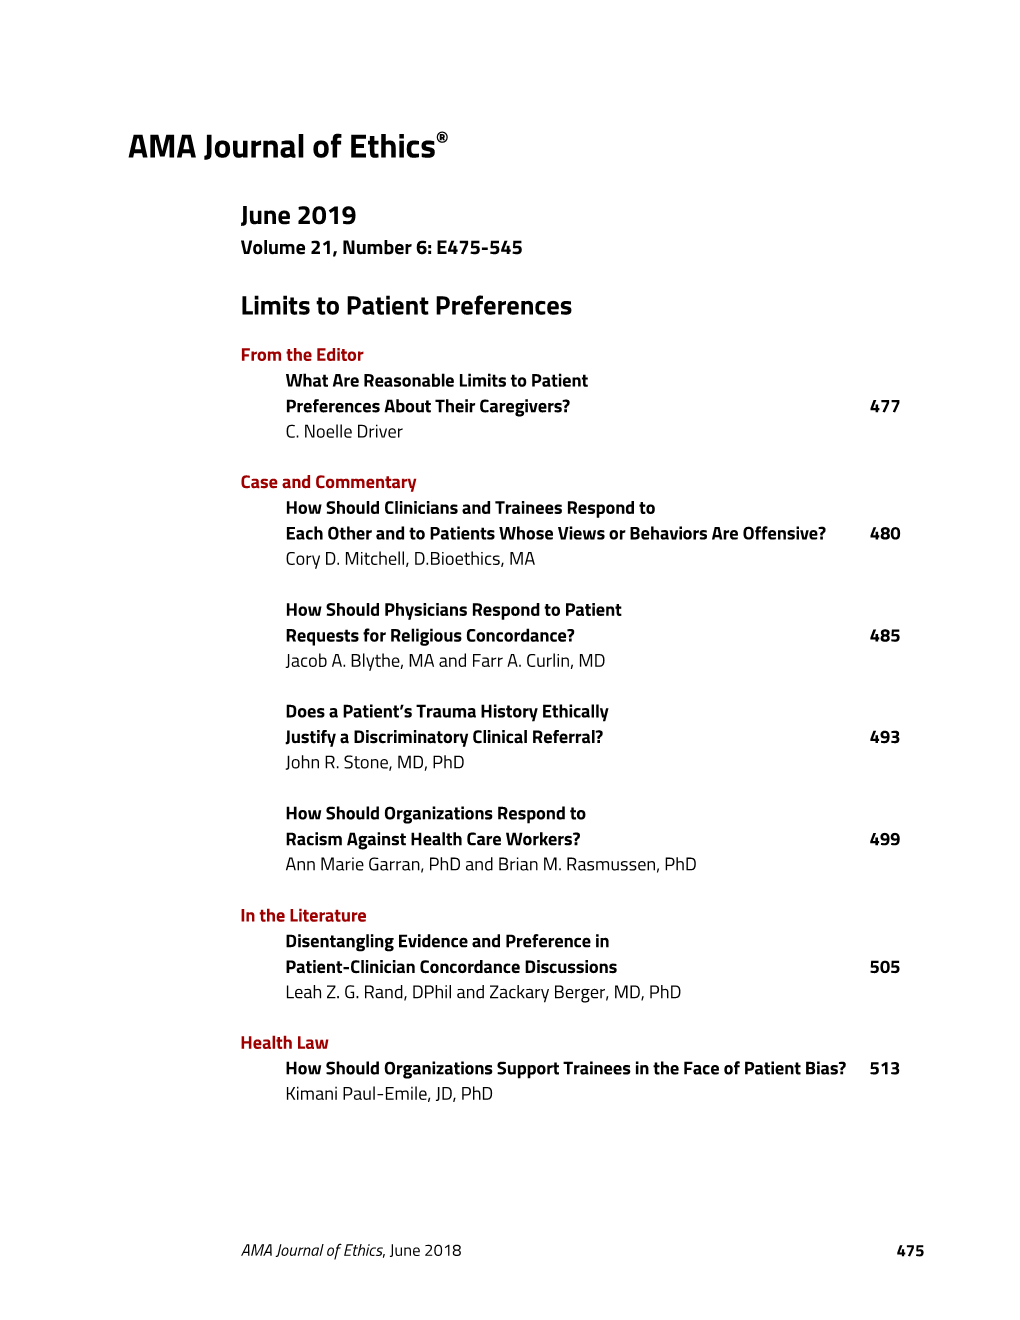 AMA Journal of Ethics® June 2019, Volume 21, Number 6: E477-479